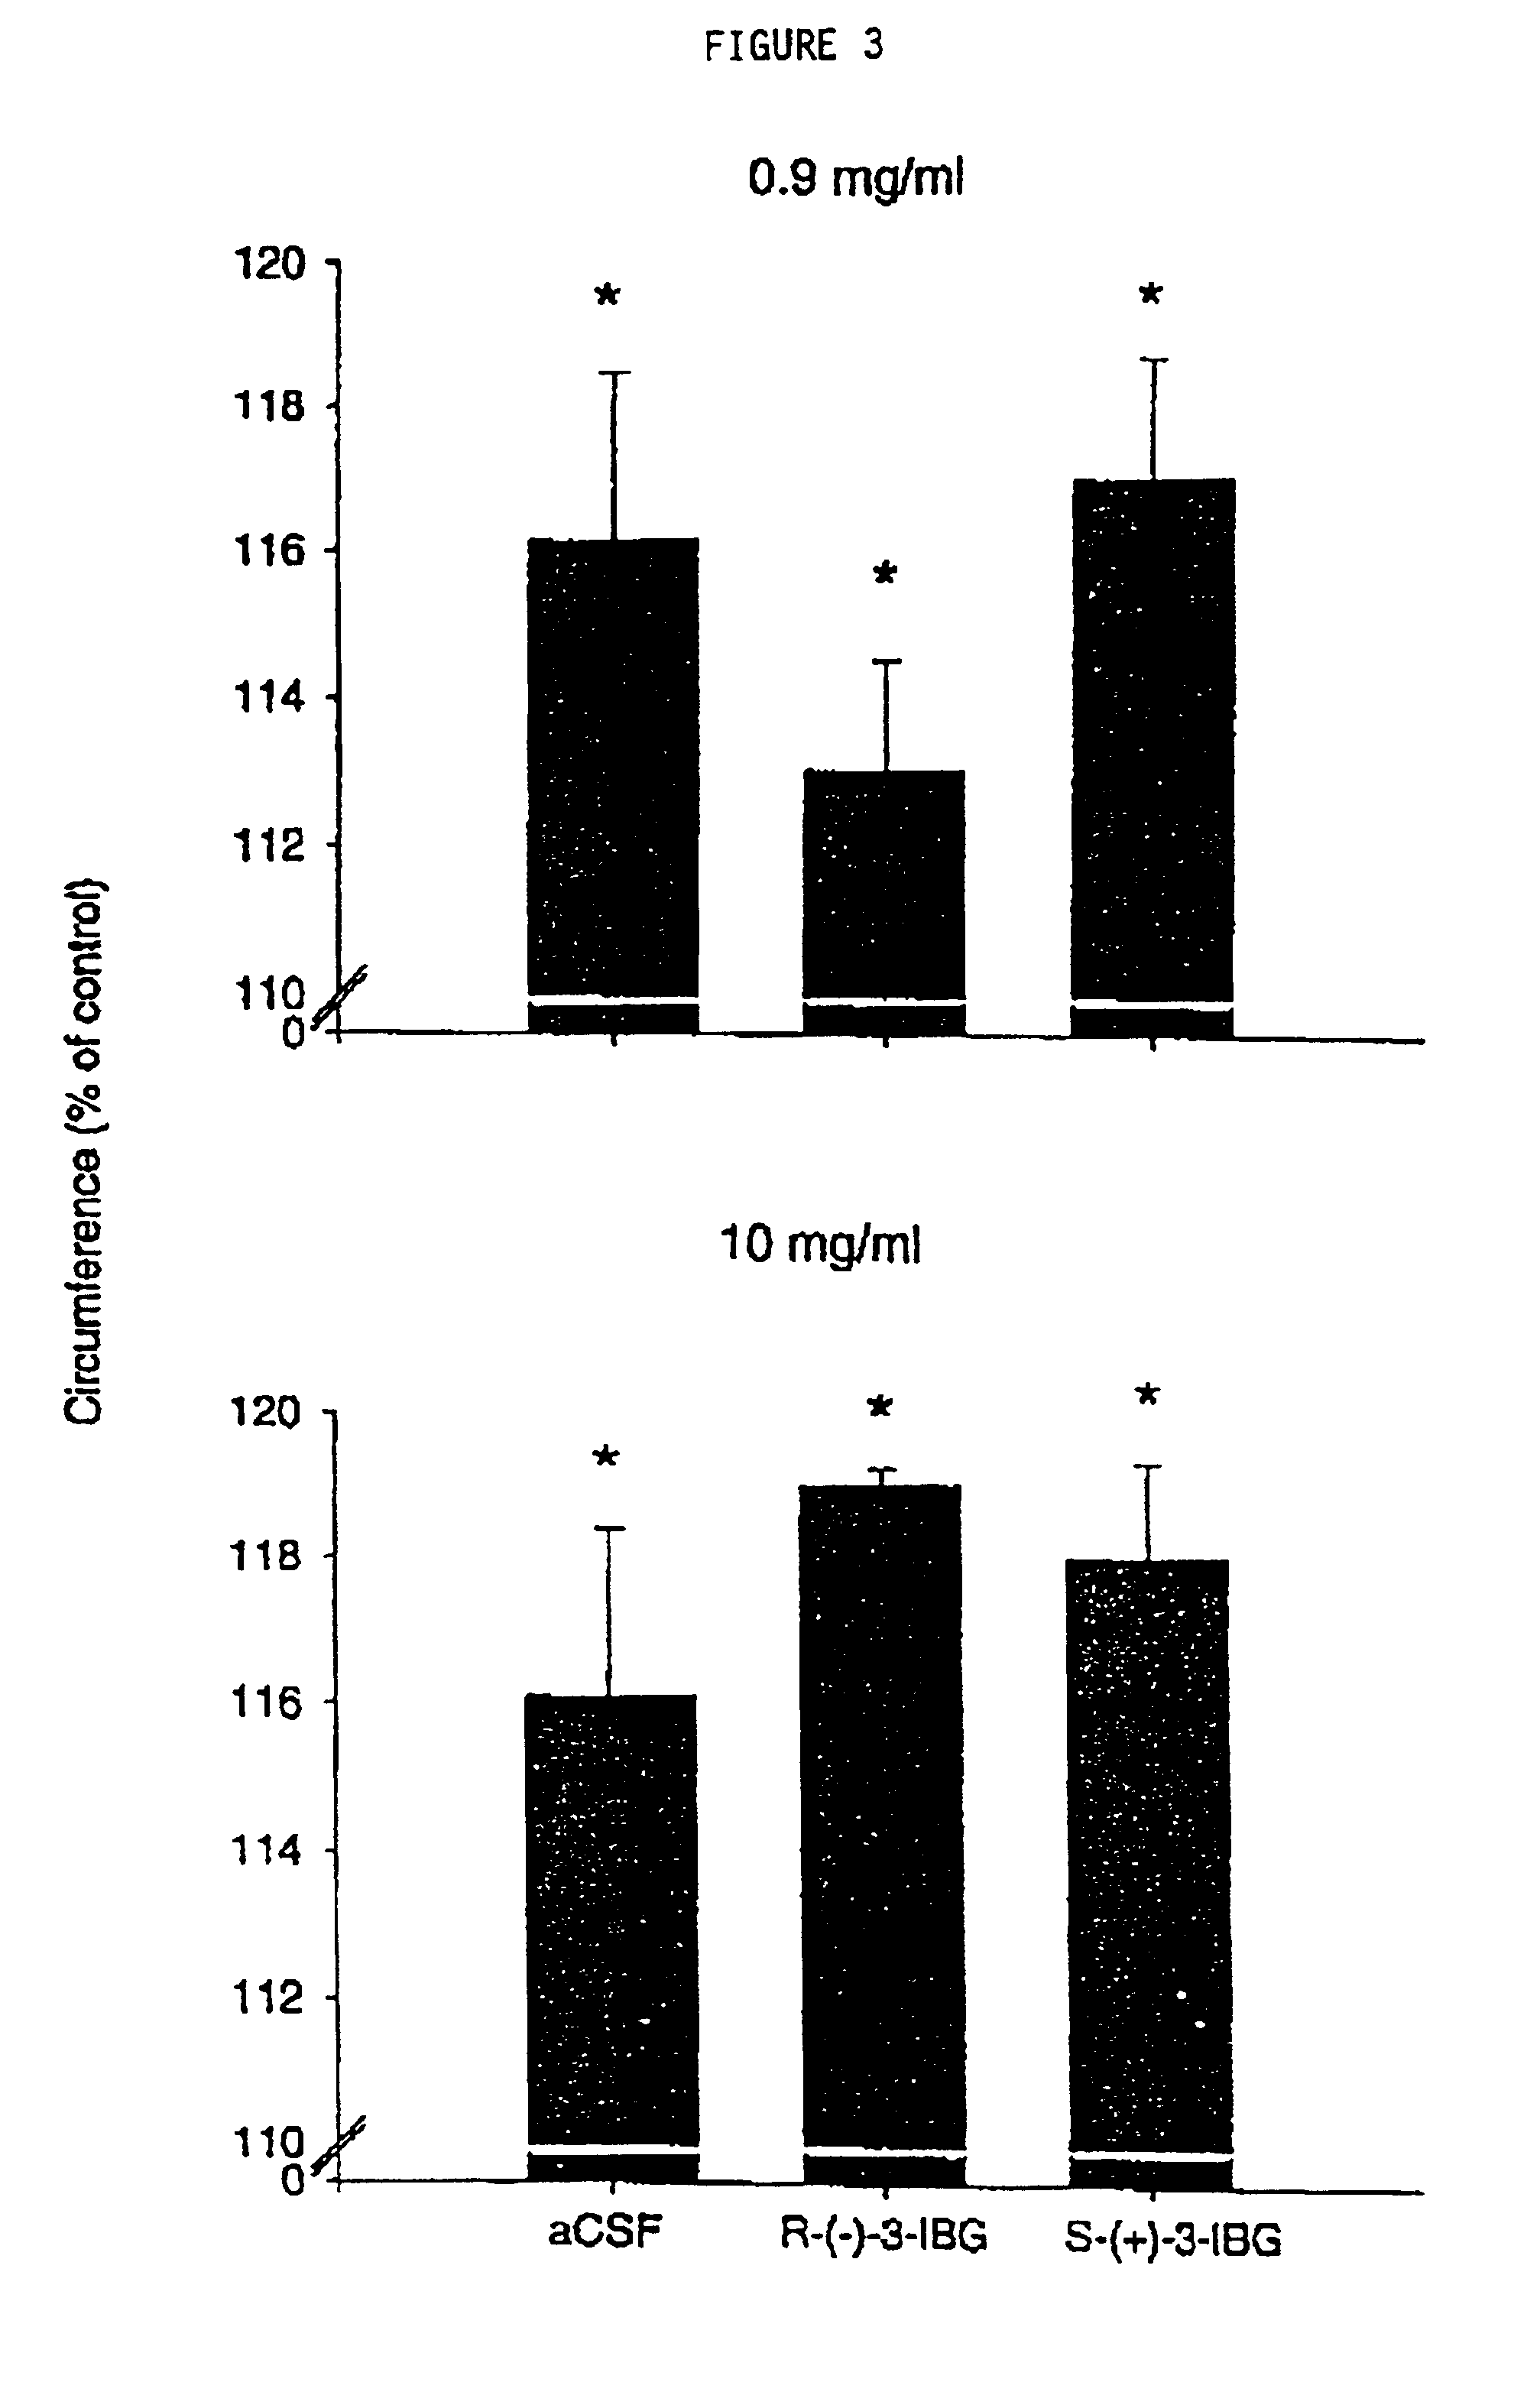 Anti-inflammatory method using gamma-aminobutyric acid (GABA) analogs